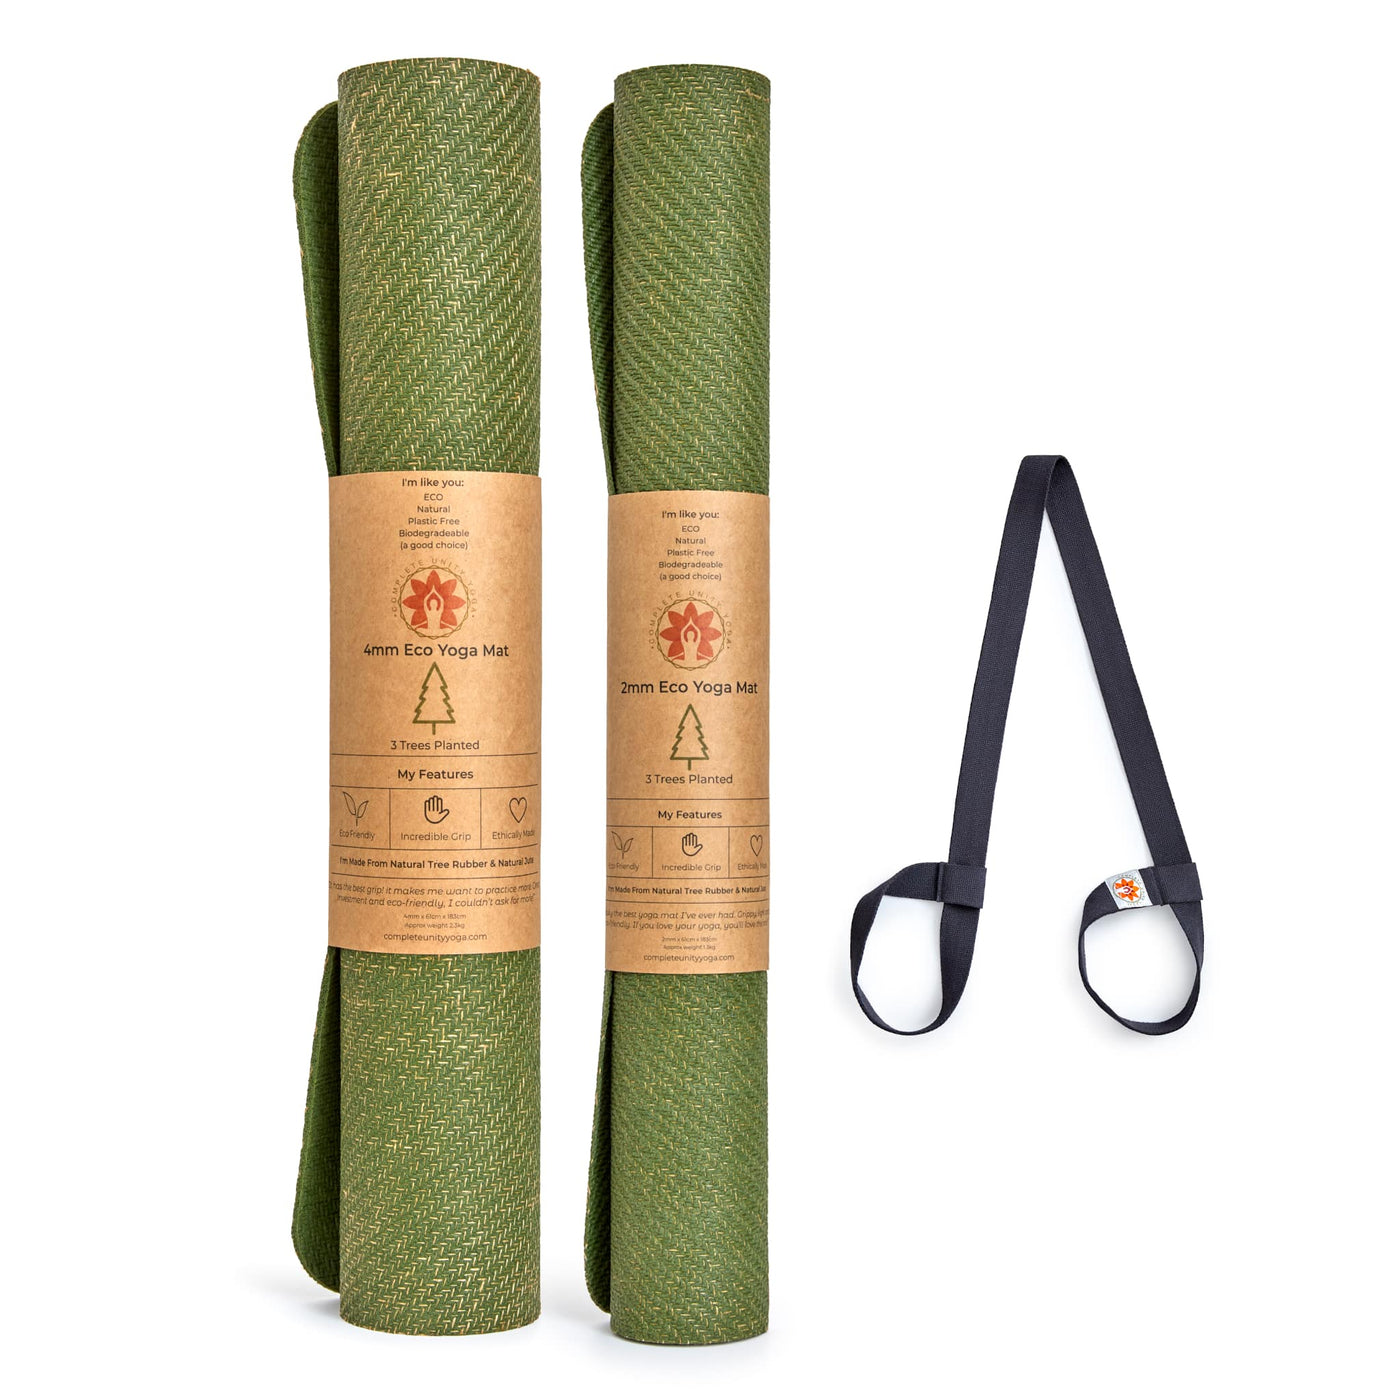 Yoga & Travel Mat Set | CompleteGrip™ Eco Friendly Yoga Mat - 4mm Forest Green  & 2mm Forest Green